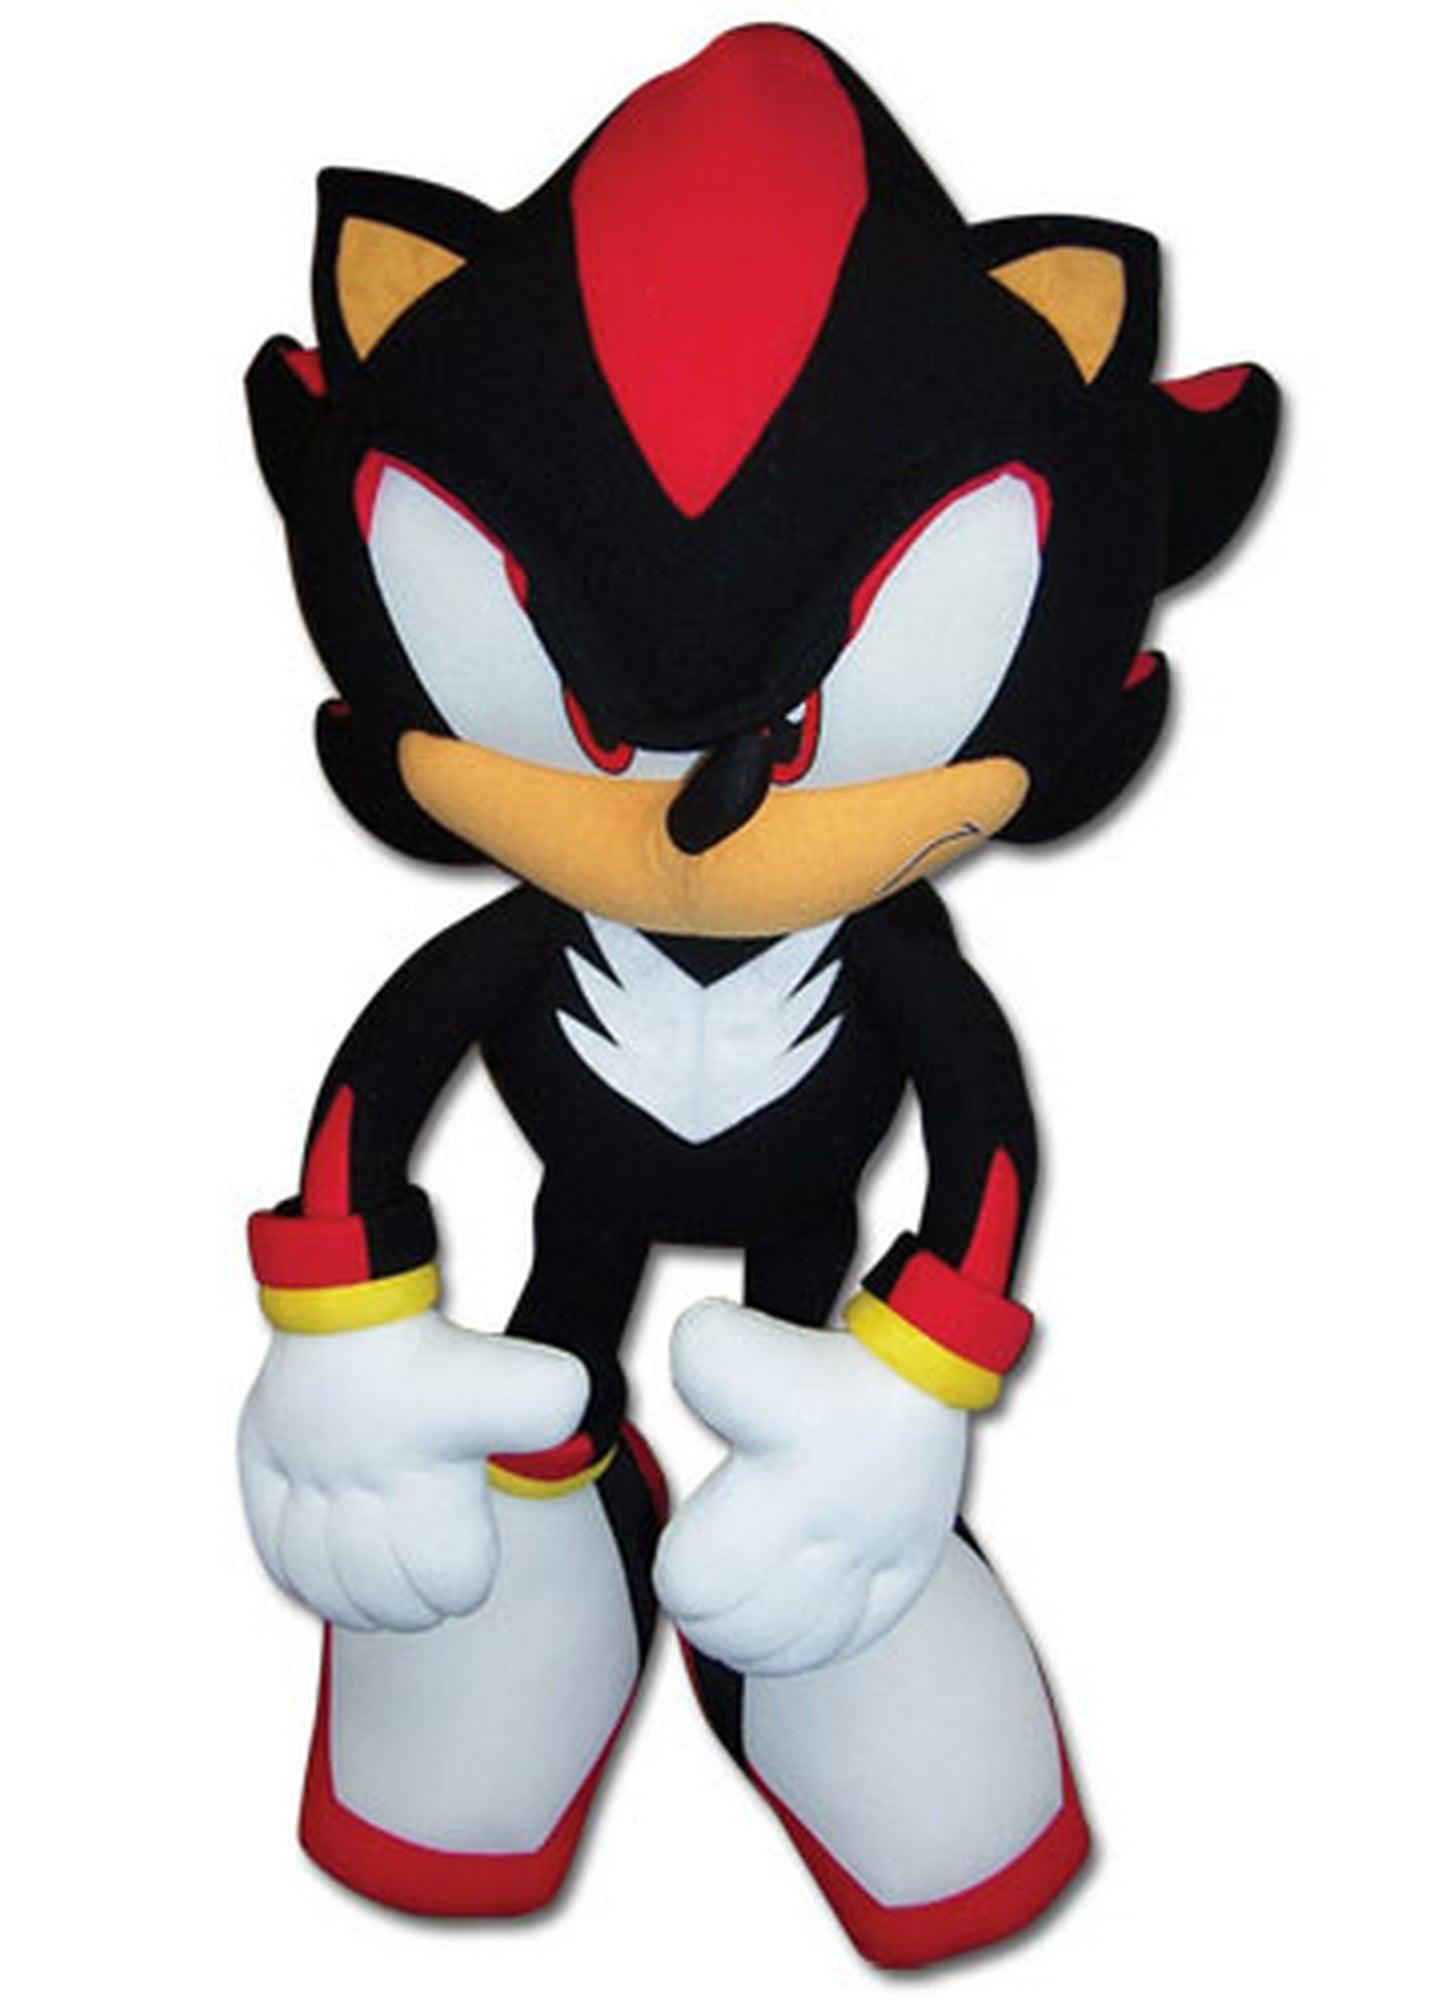  Sonic The Hedgehog Plush 9-Inch Shadow